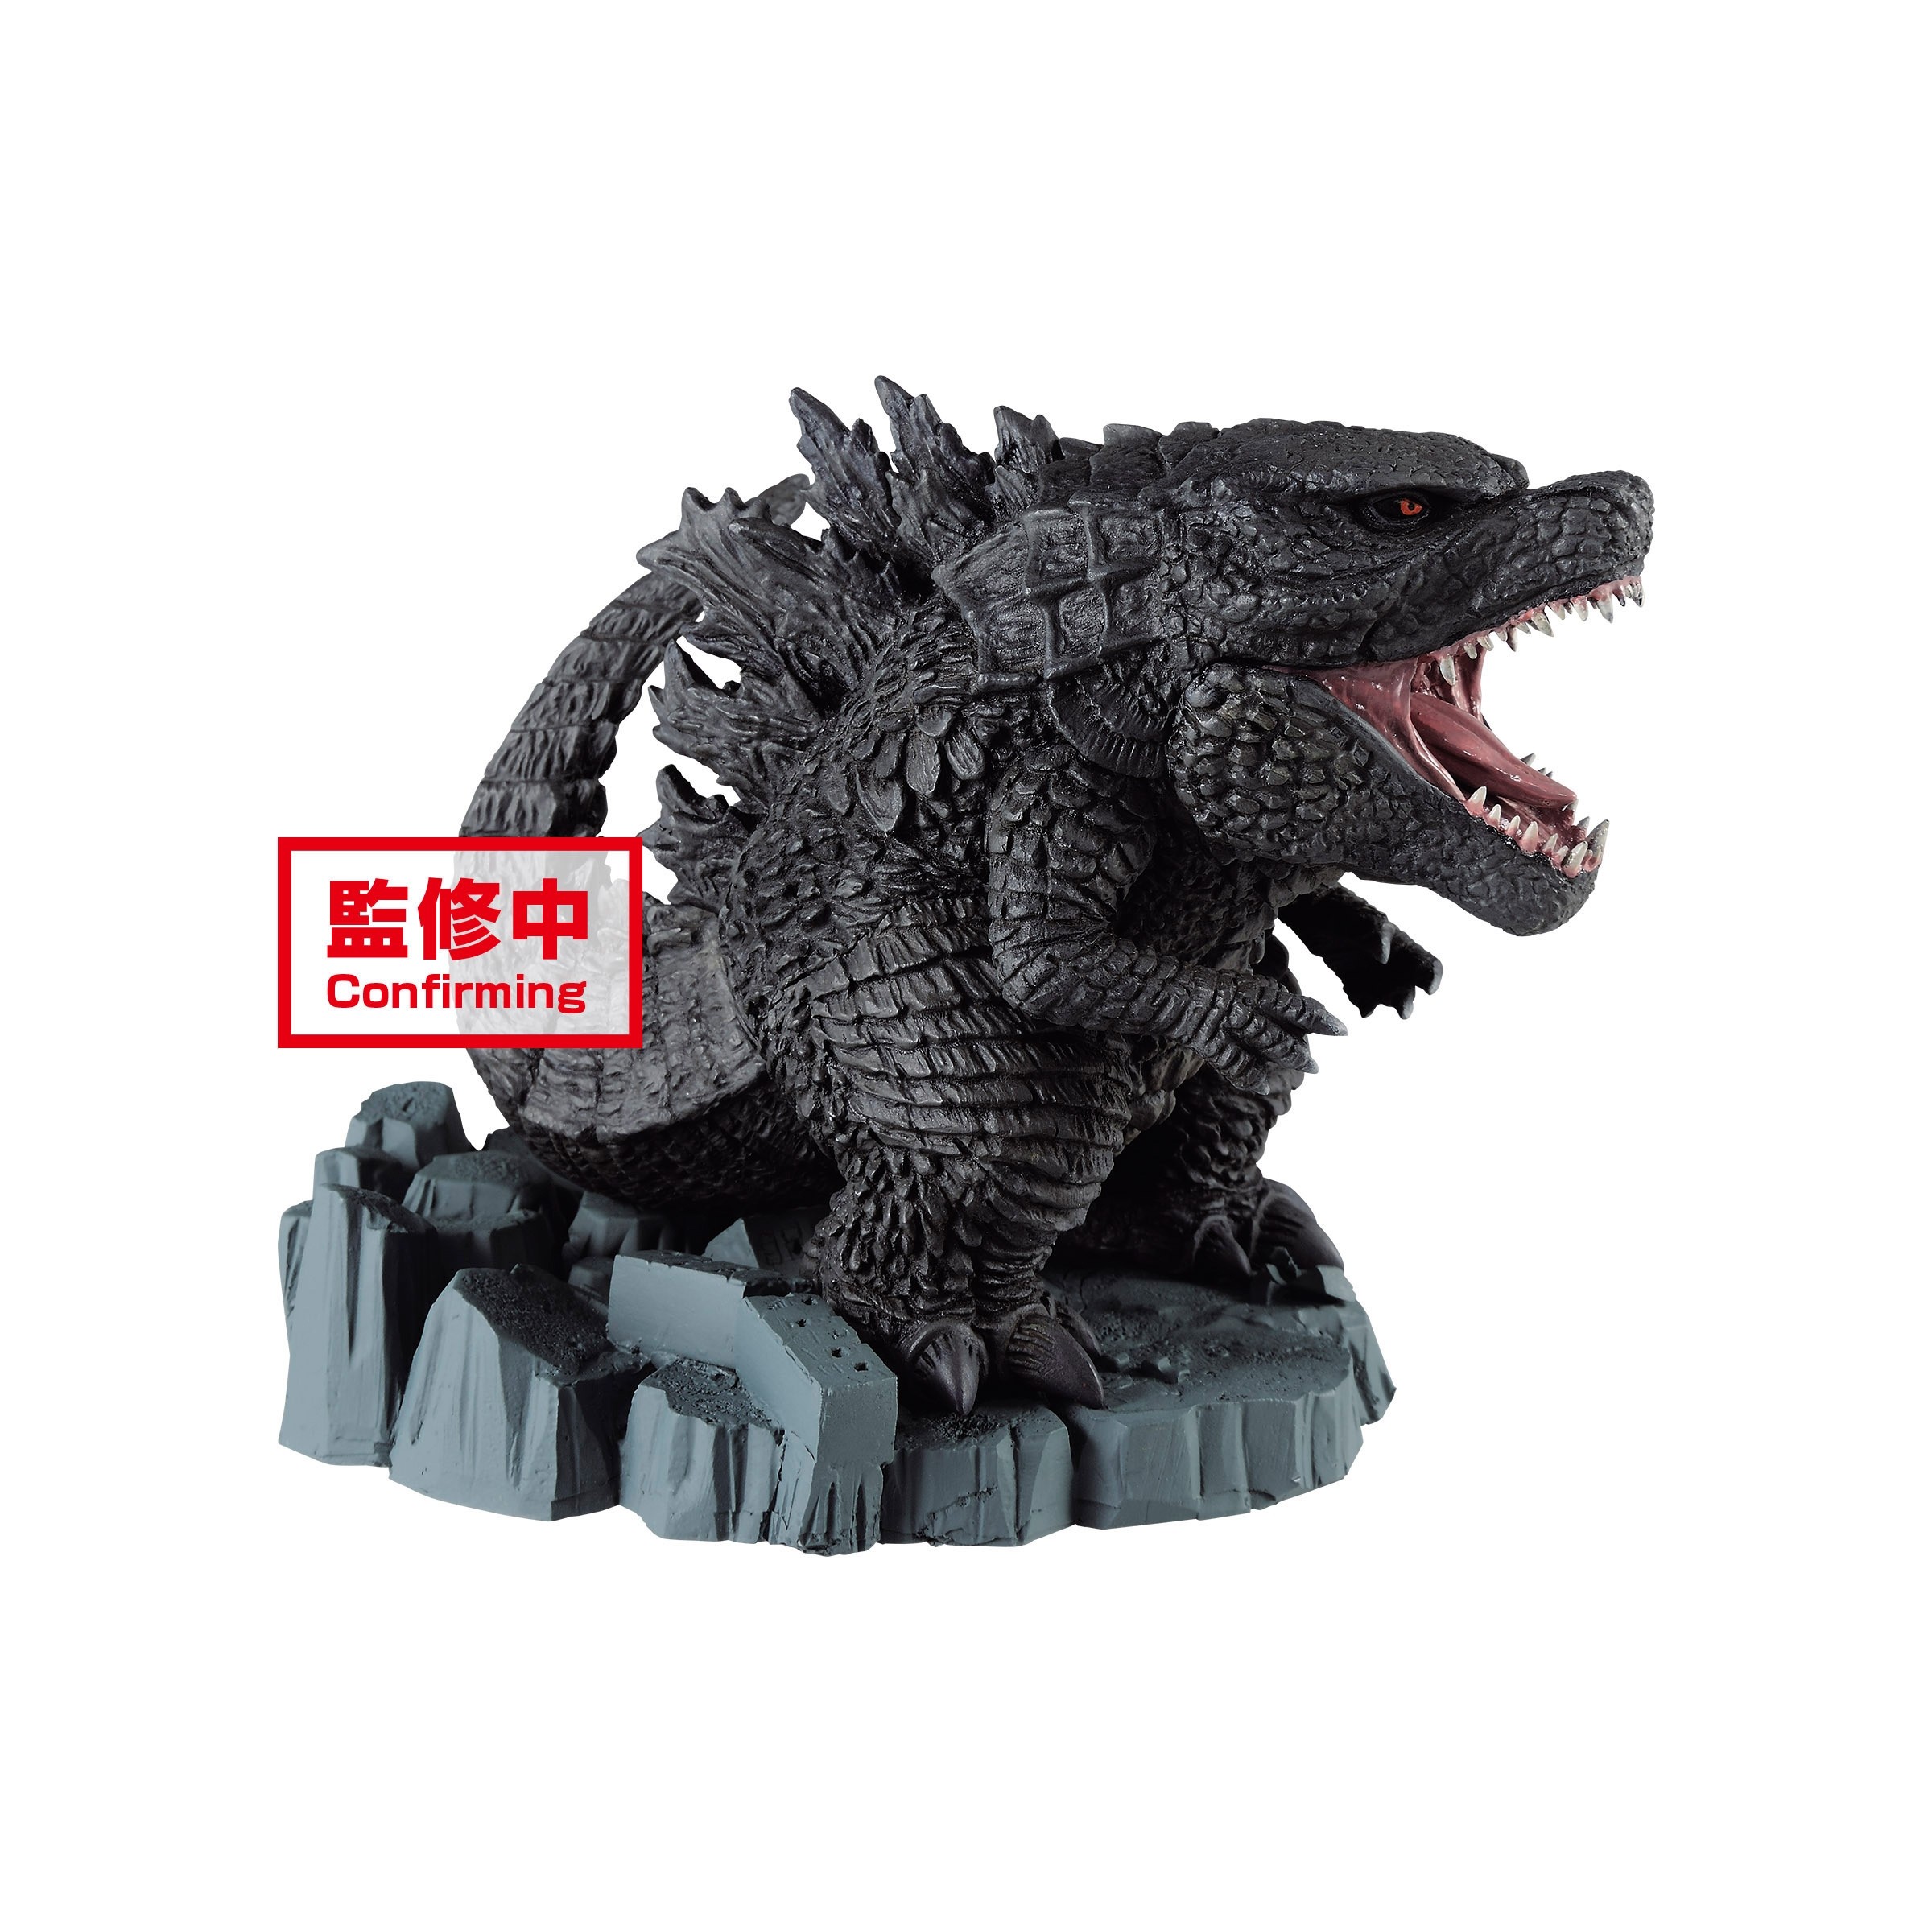 Godzilla 2019 Deformation Figure (29961)